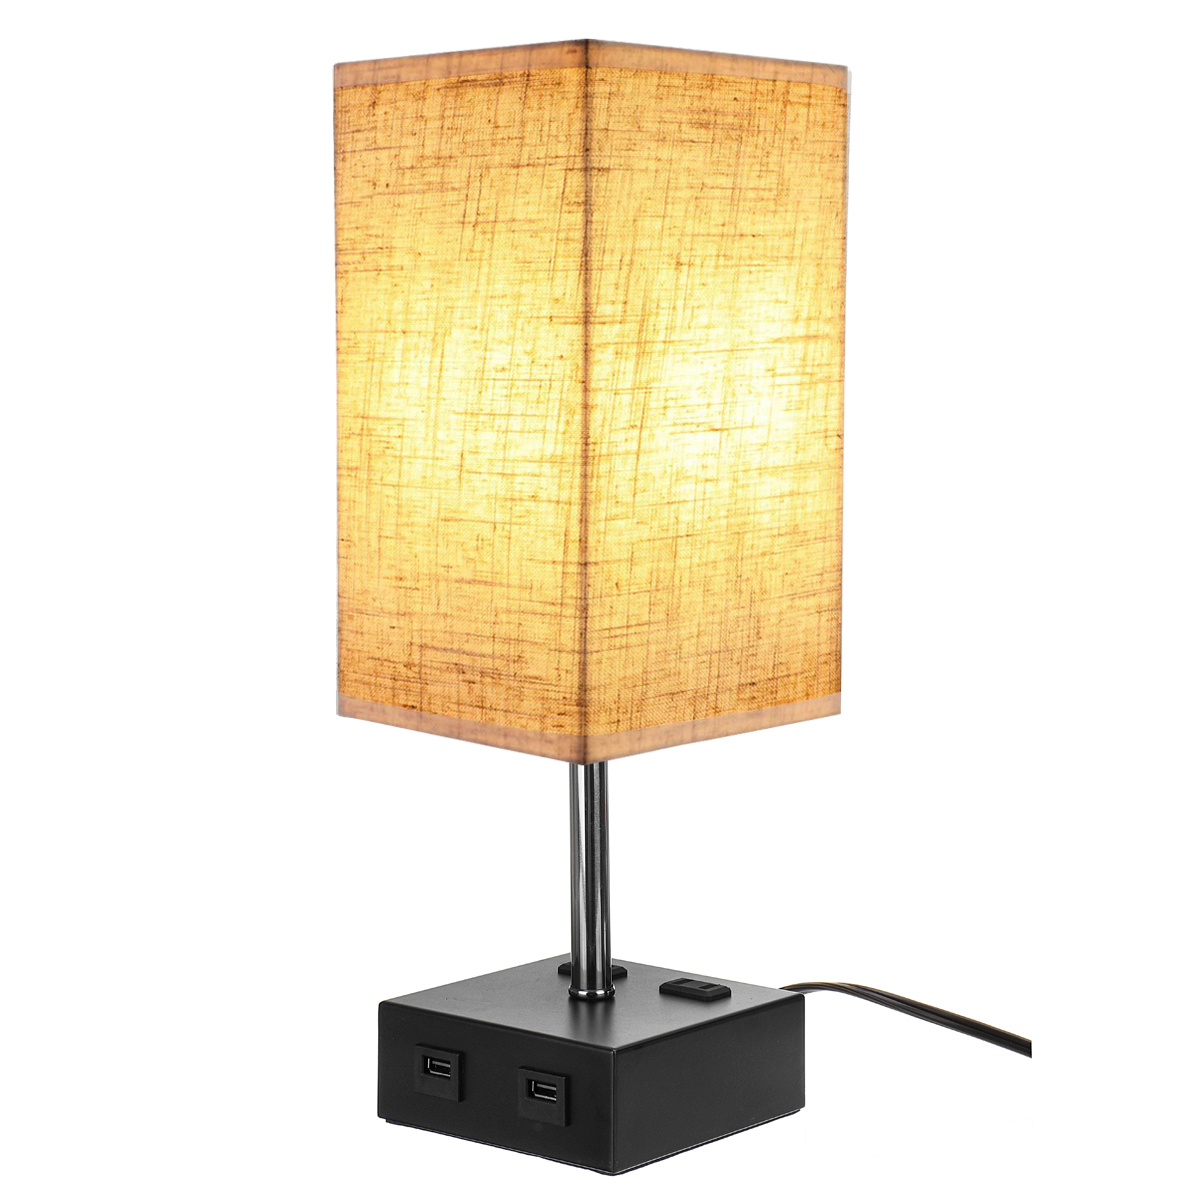 220V-Fabric-Fashion-Simple-Table-Lamp-Dual-Port-USB--US-Plug-Without-Bulb-1809421-7